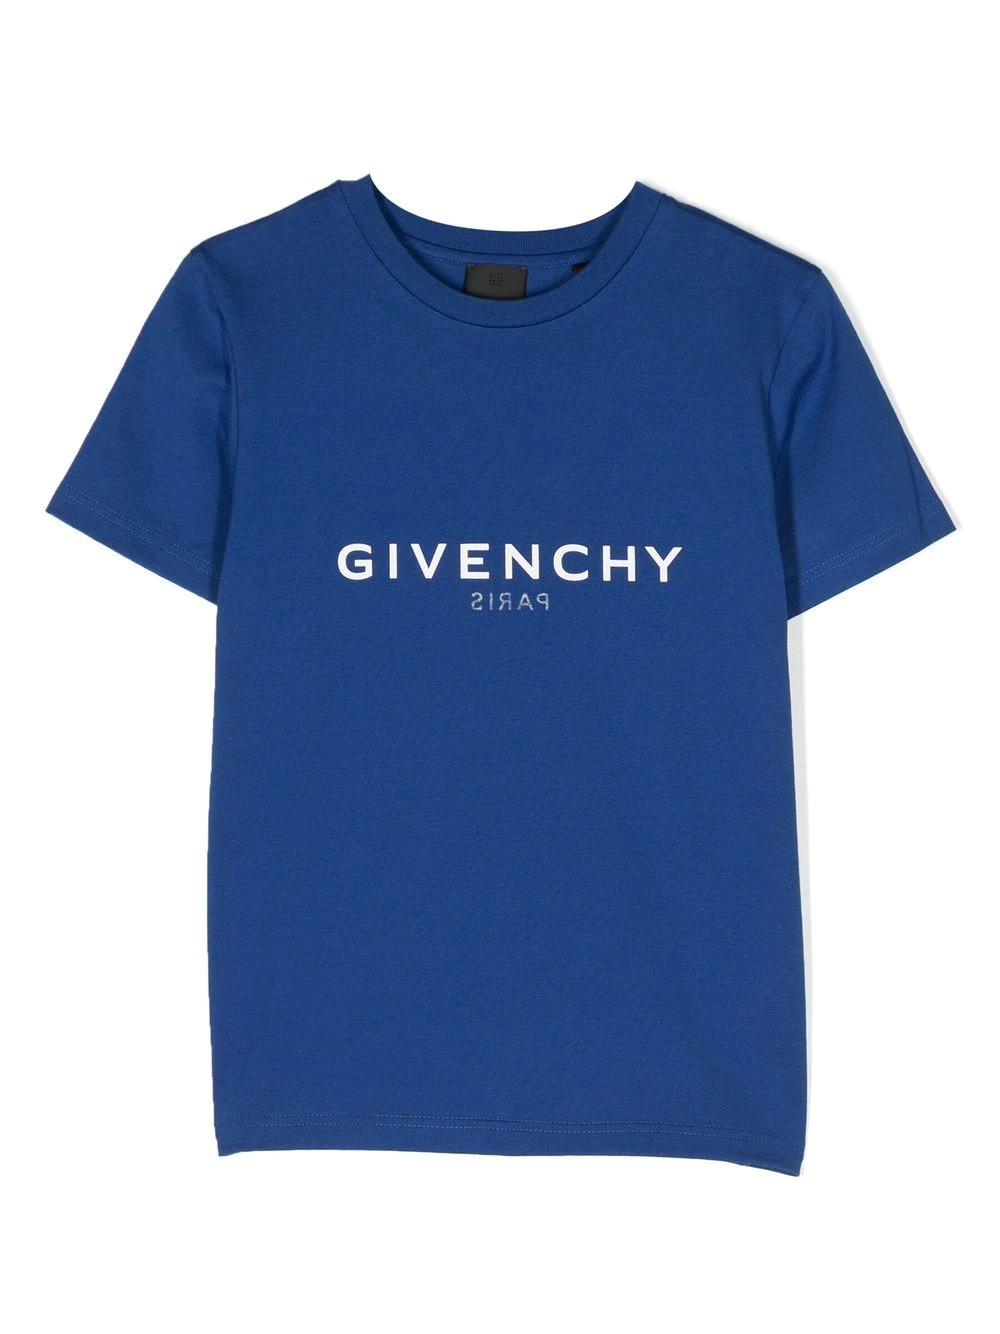 Givenchy Boys Blue Cotton Logo T-shirt